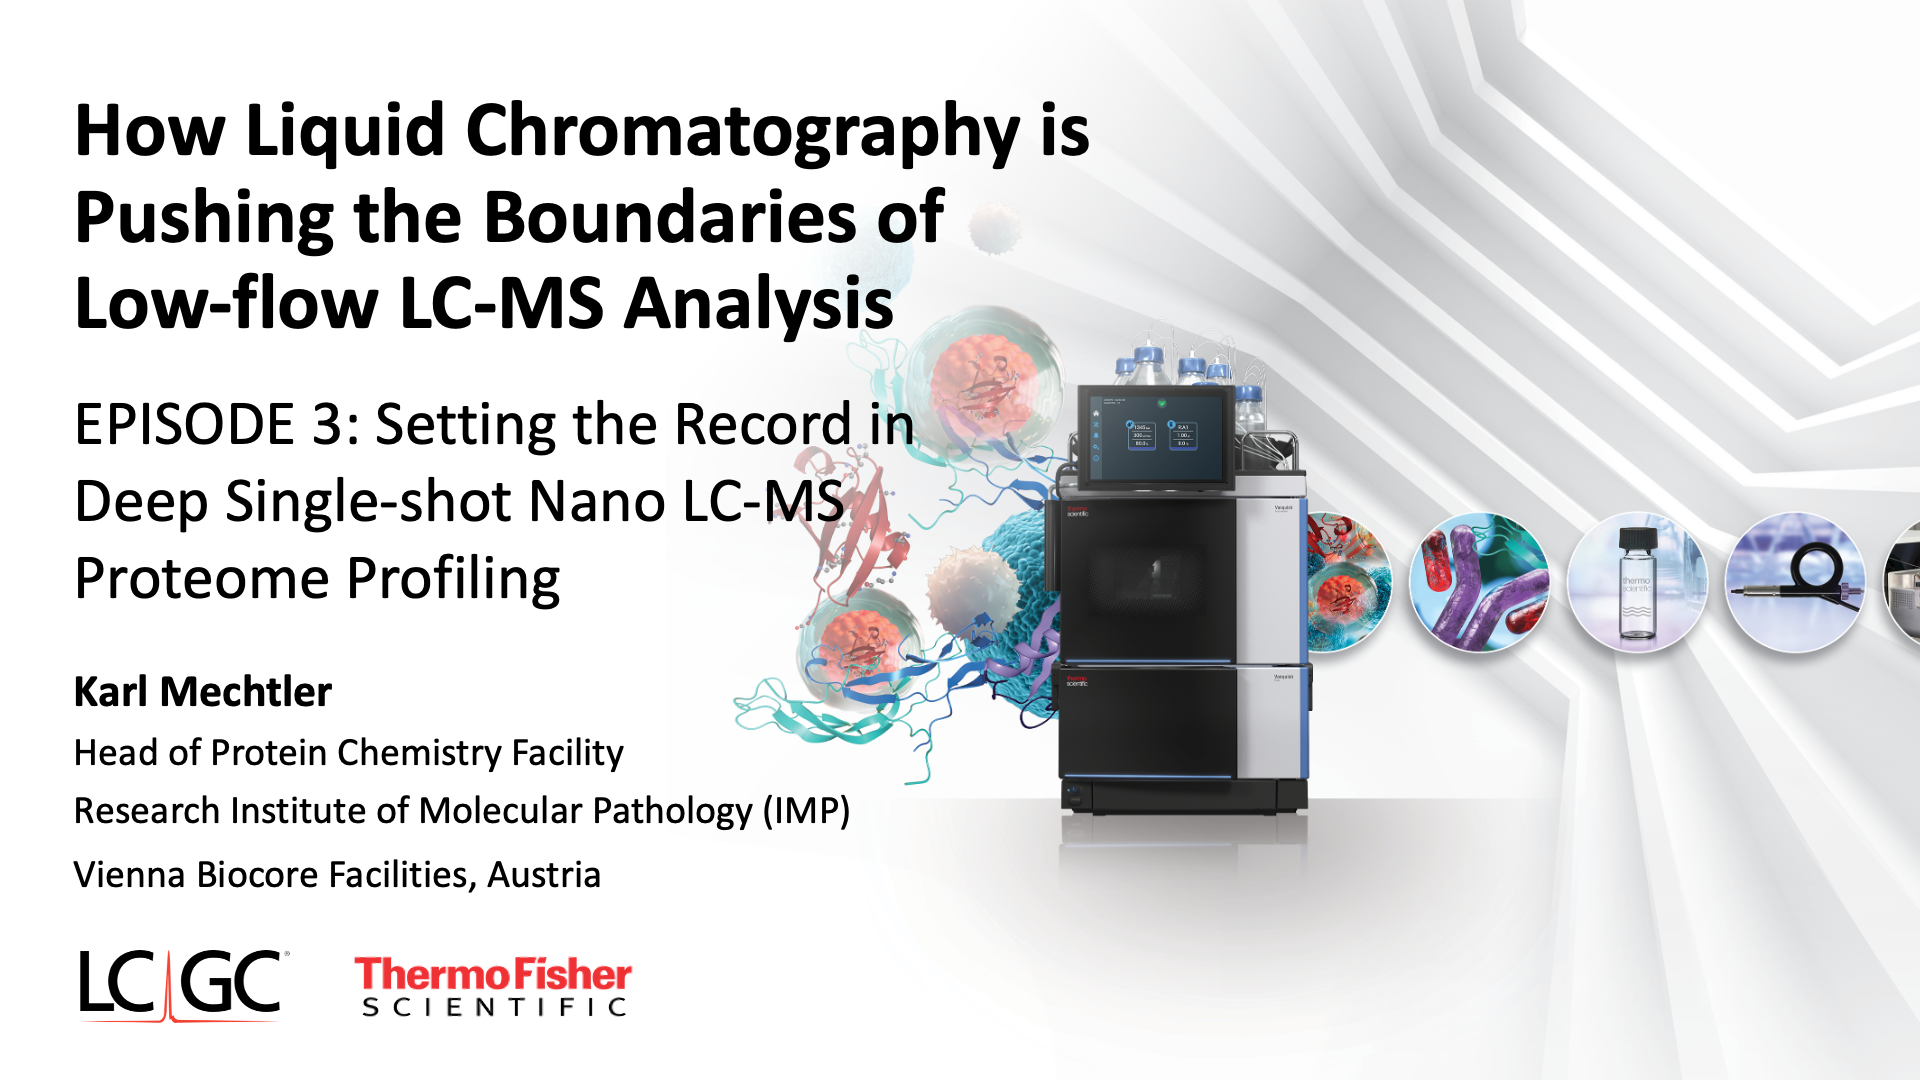 Setting the Record in Deep Single-shot nanoLC-MS Proteome Profiling